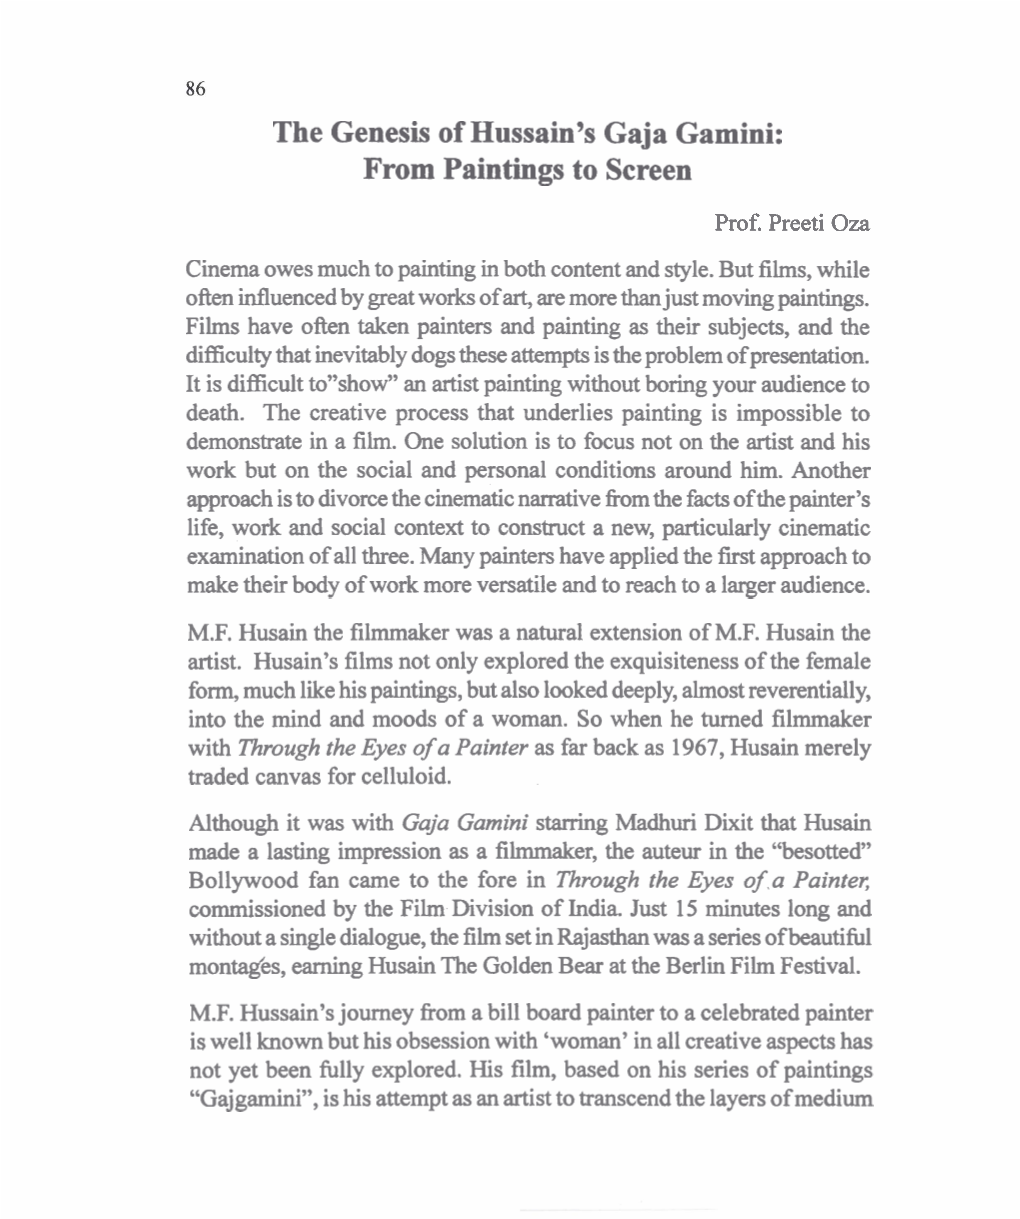 The Genesis of Hussain's Gaja Gamini: from Paintings to Screen